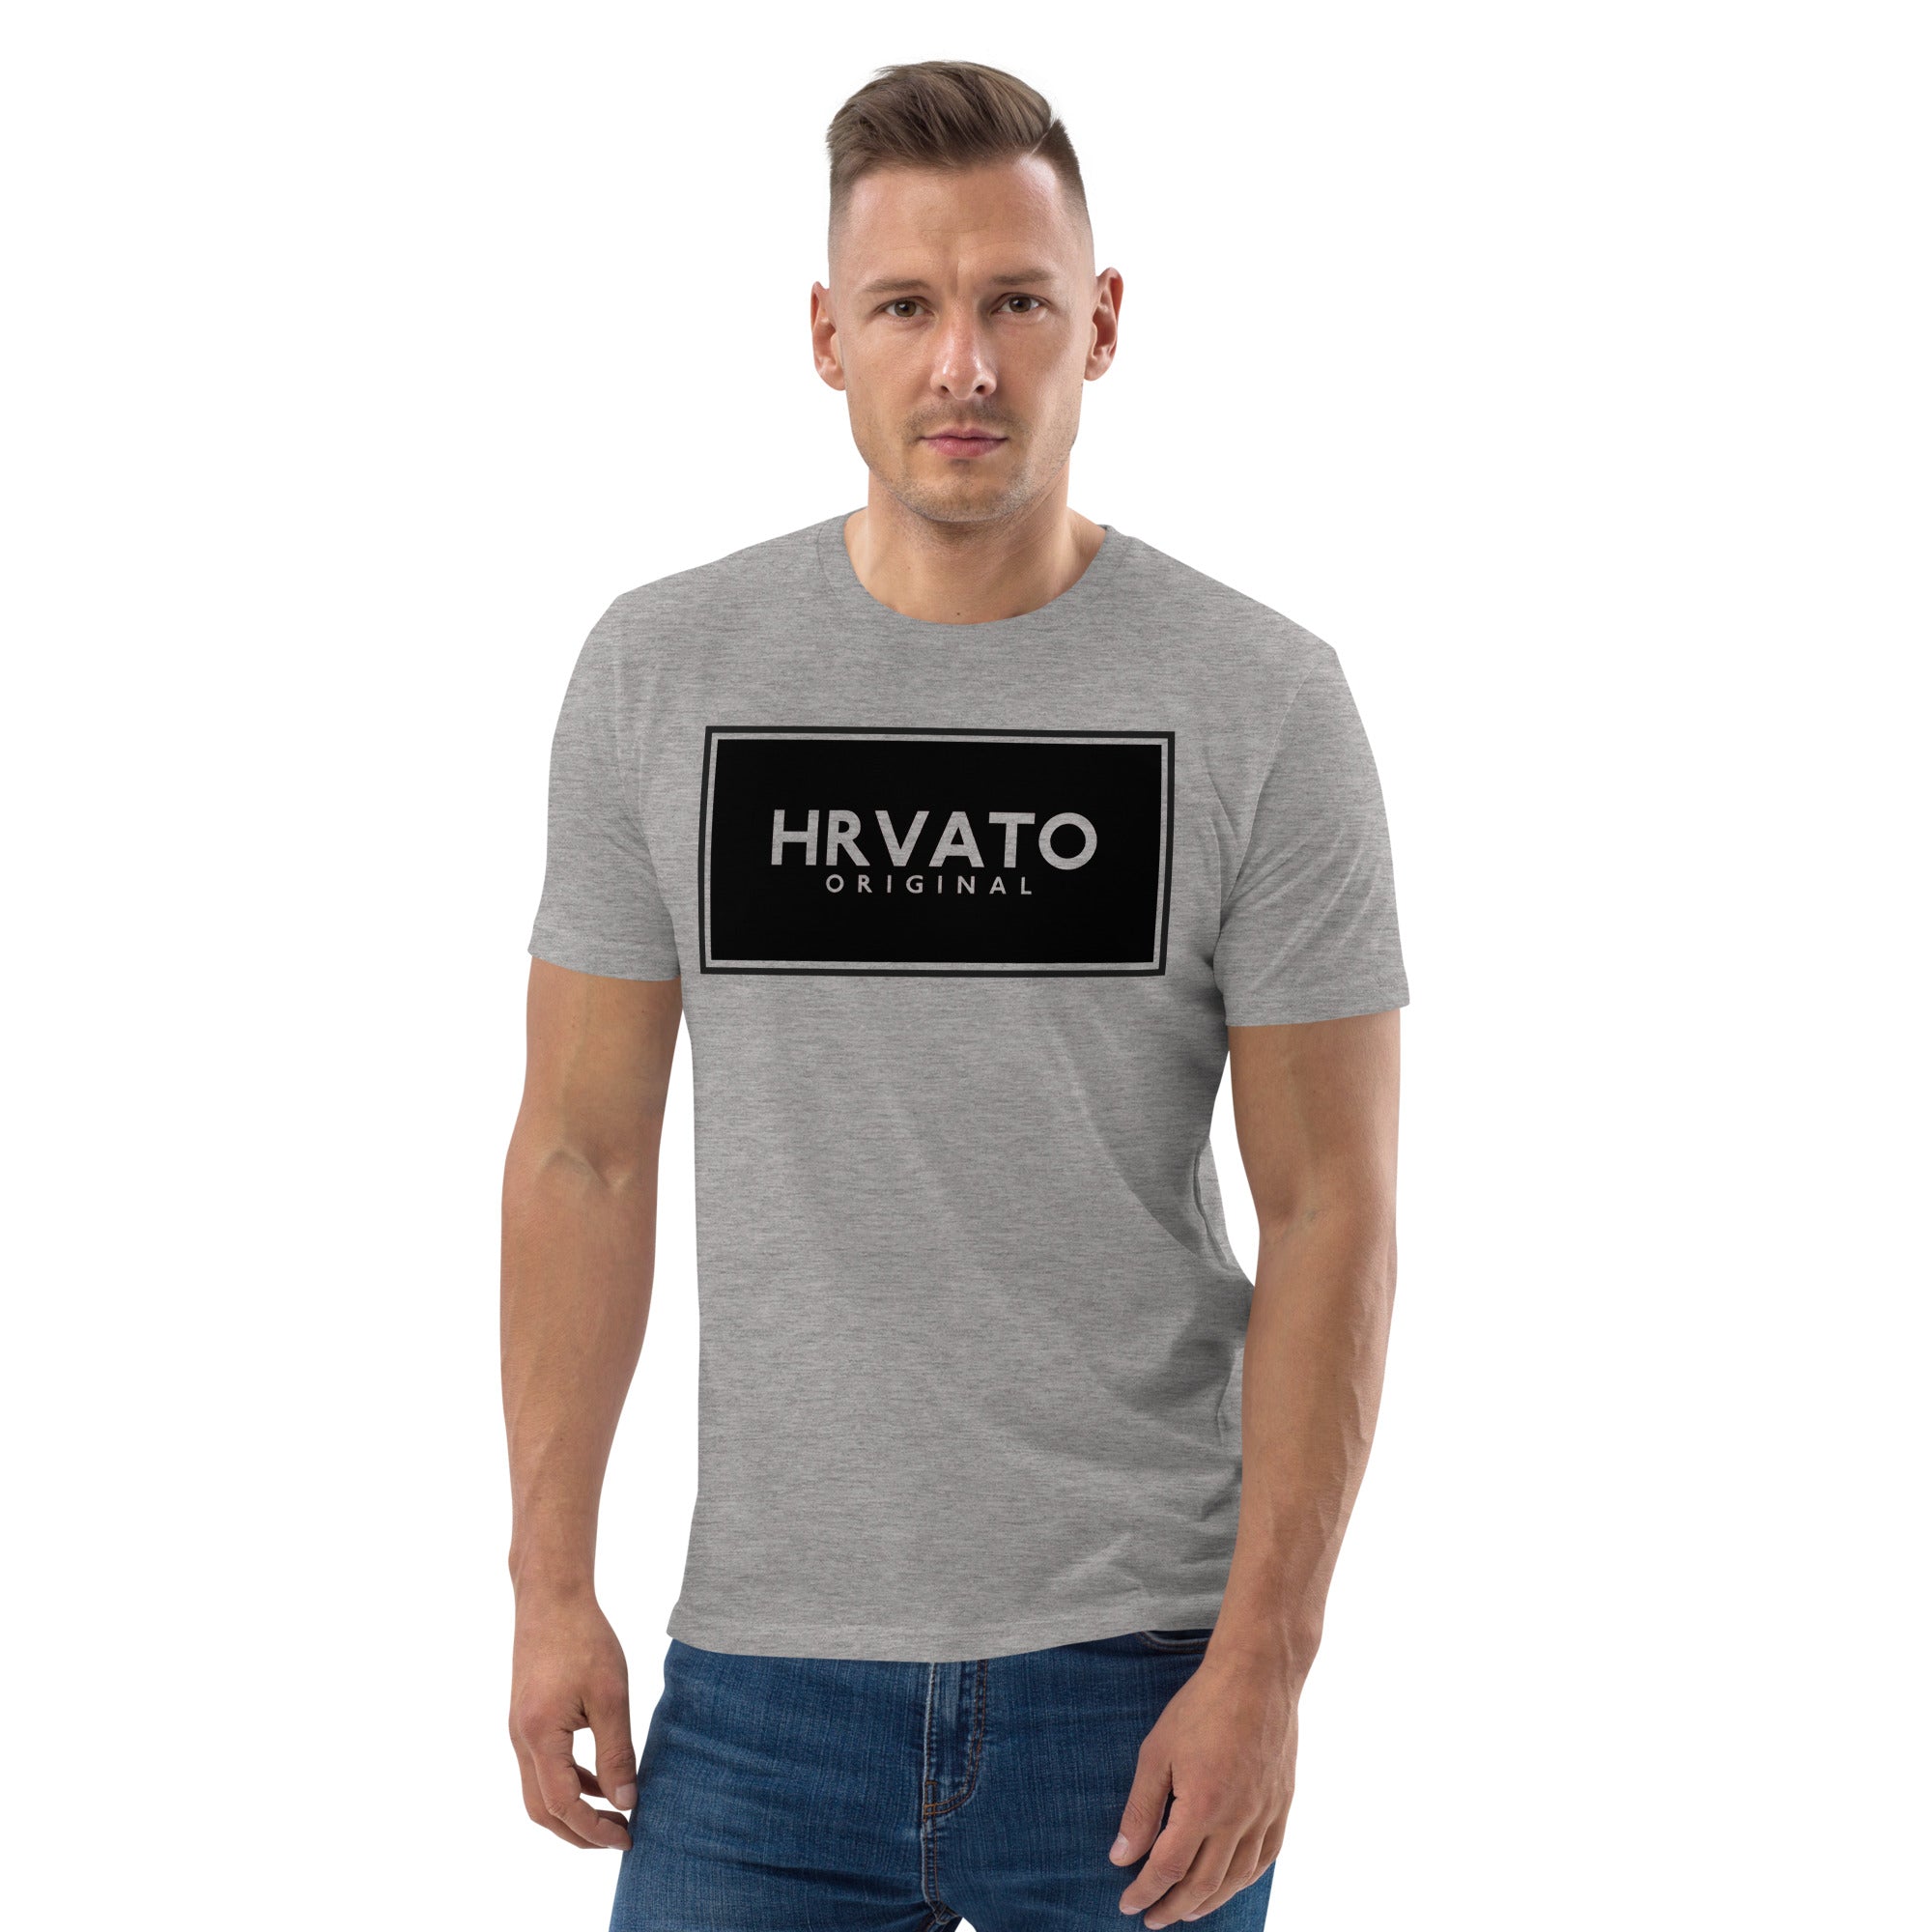 Hrvato Original Men's Casual T-Shirt - Authentic Croatian Design